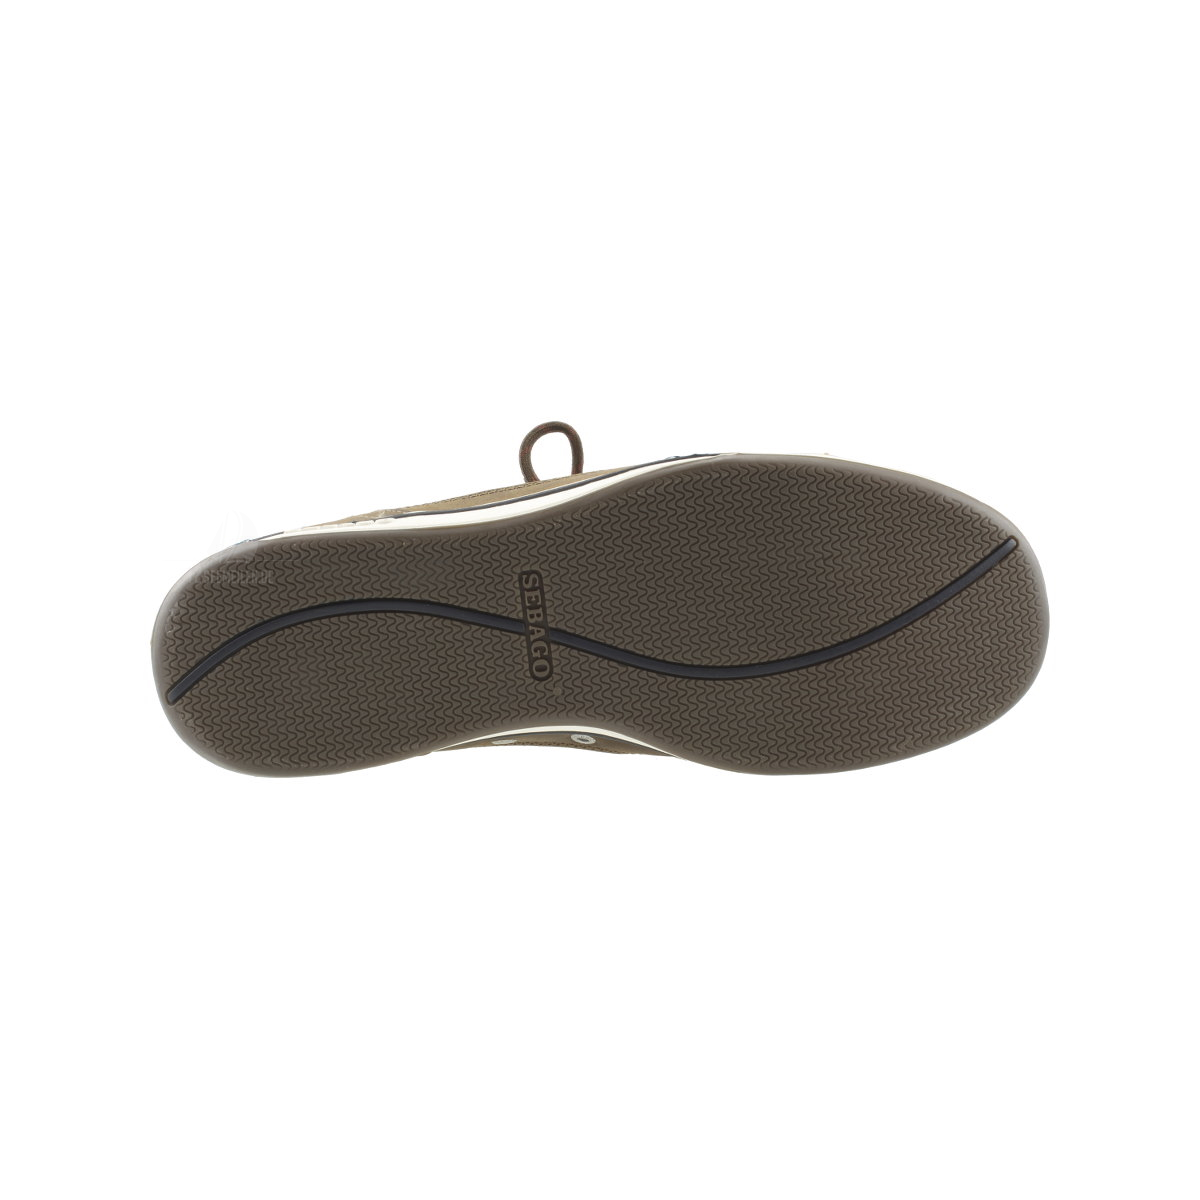 Sebago Triton Three-Eye chaussures bateau homme walnut leather, taille EU 45 (US 11)